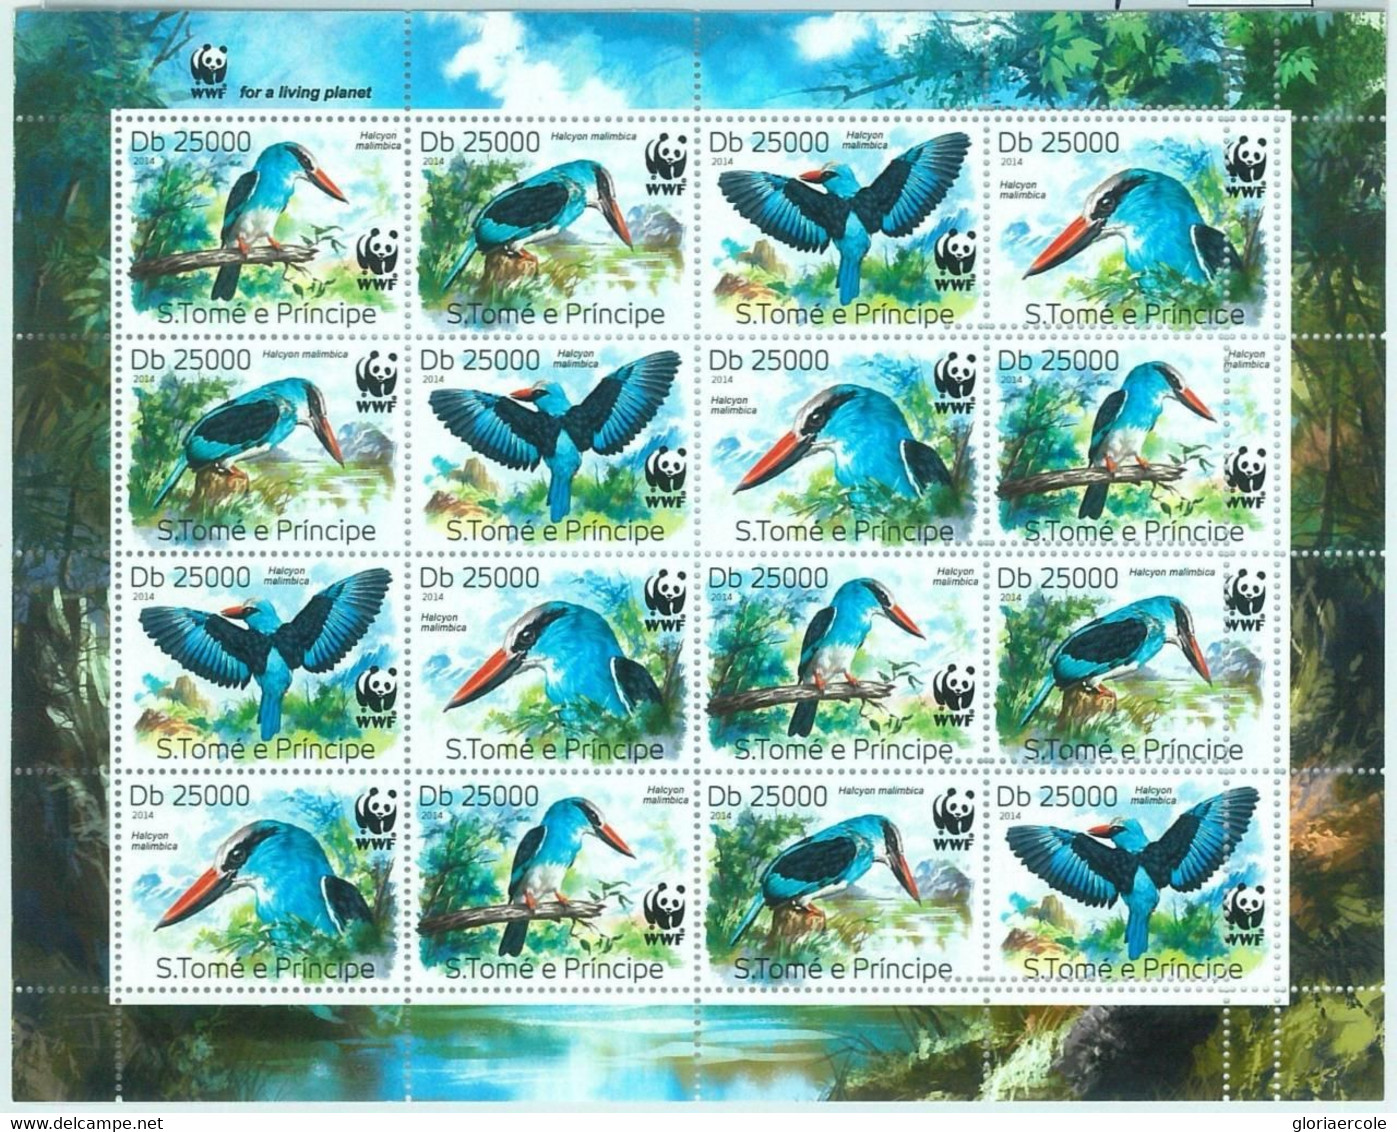 M1572 - S. TOME & PRINCIPE - ERROR, 2014 MISSPERF SHEET: Birds, WWF, Fauna  R04.22 - Used Stamps